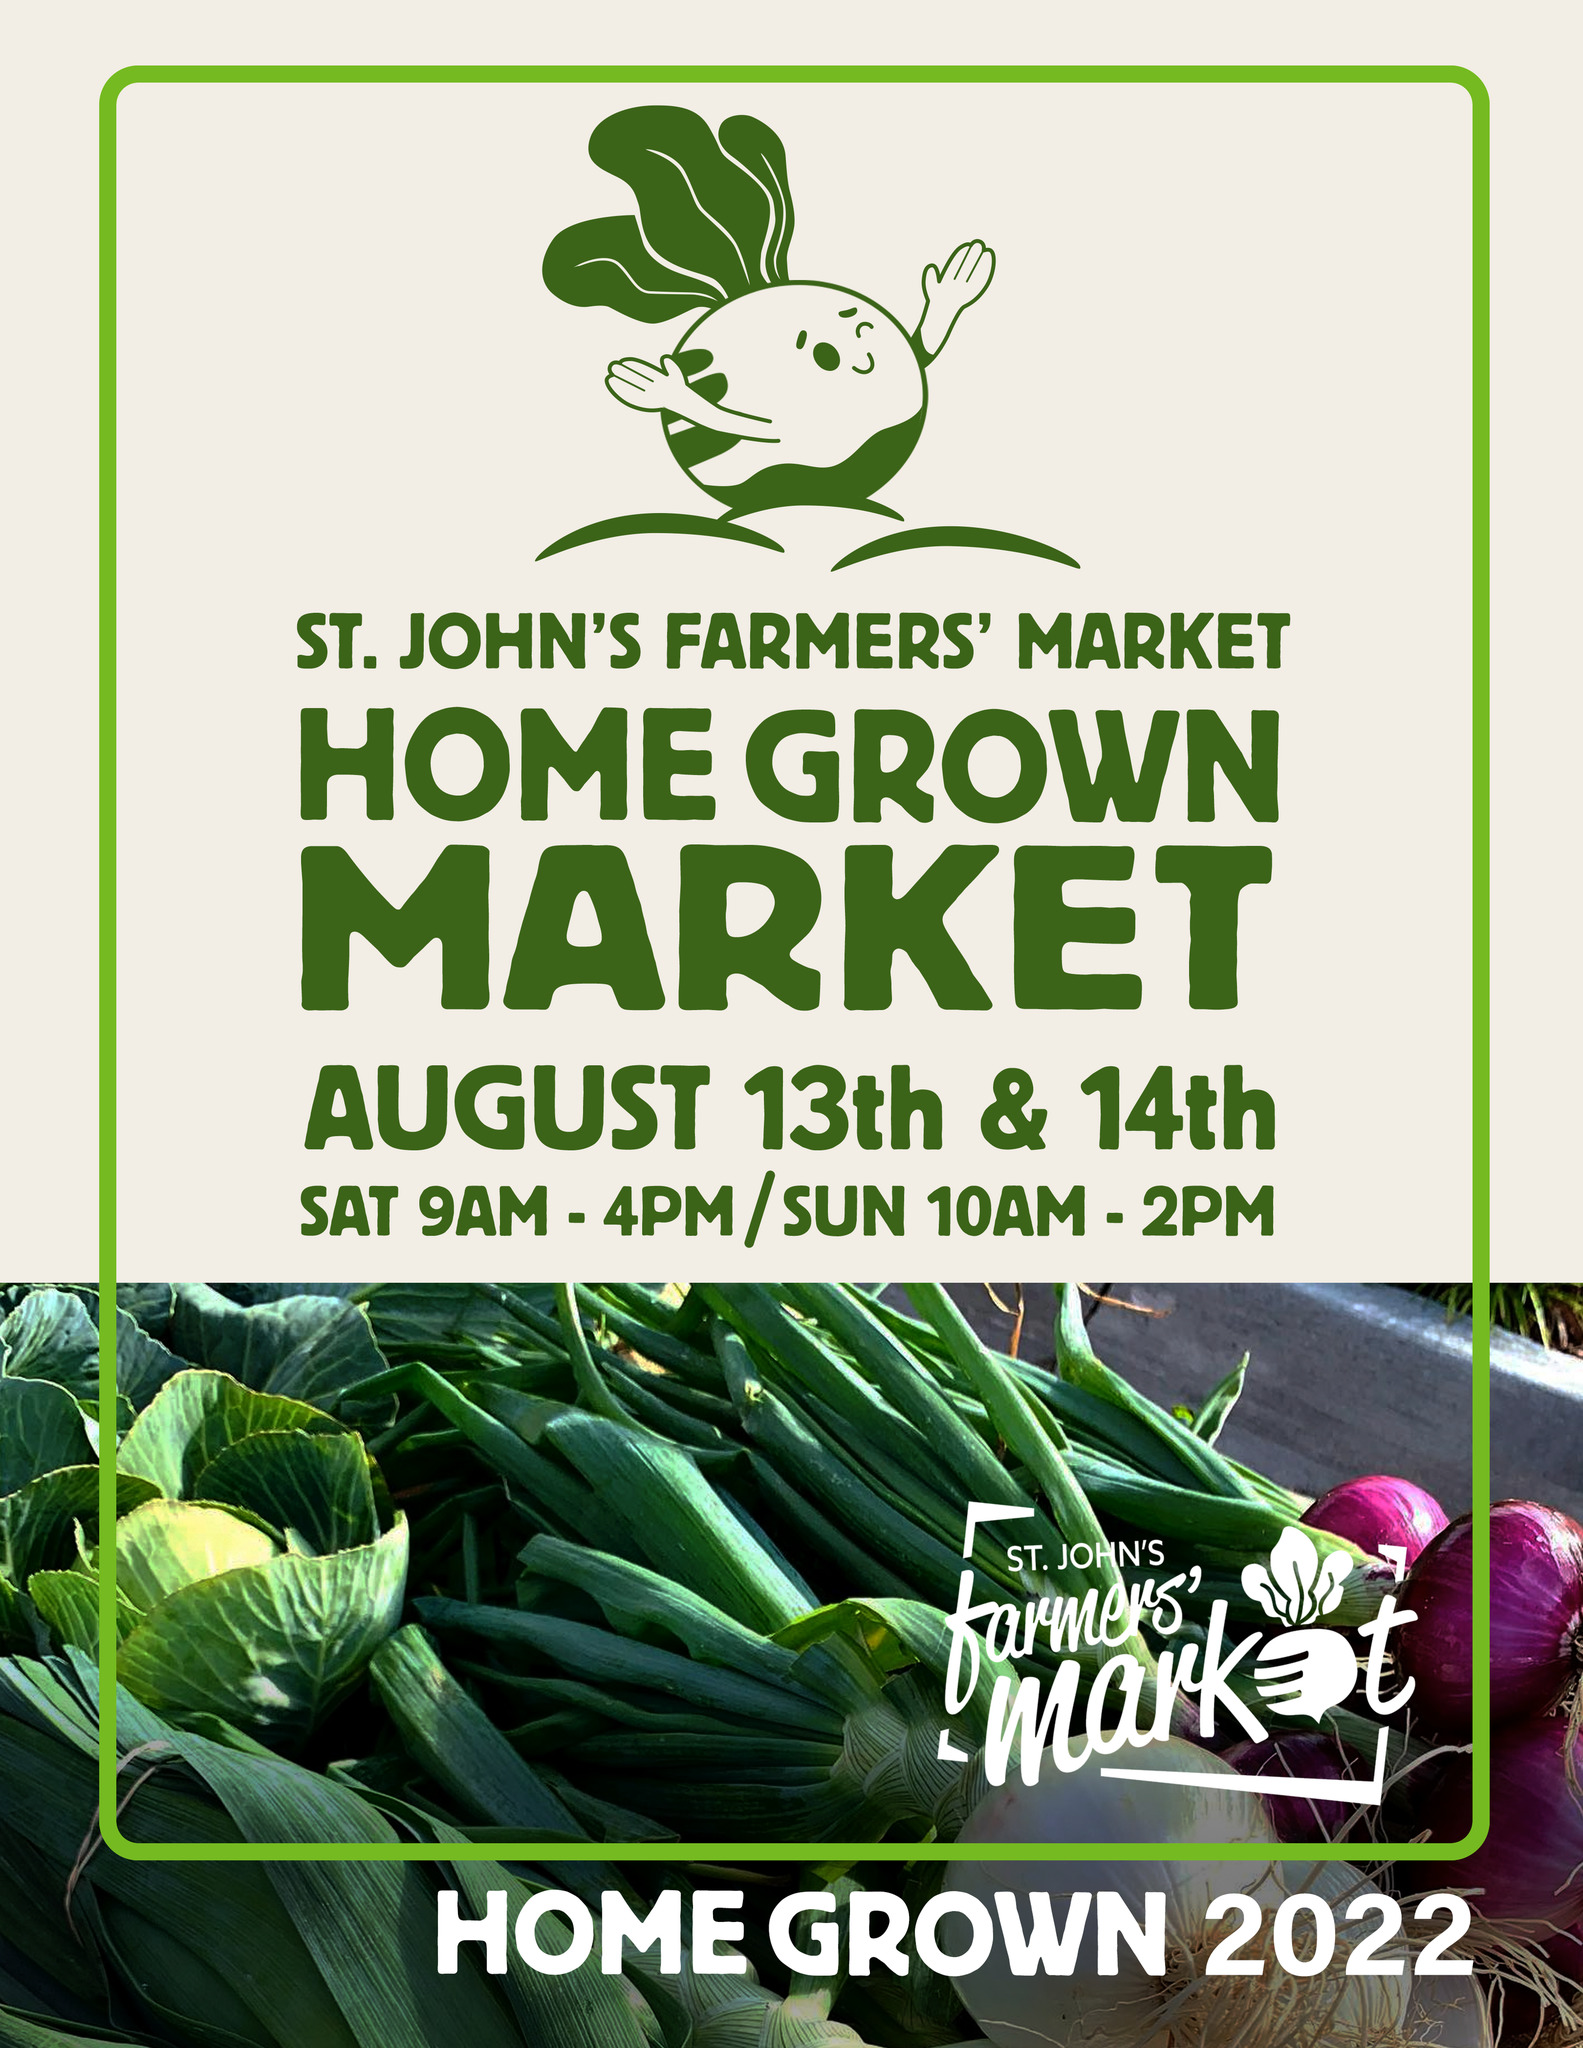 SJFM Home Grown Market Weekend August 13-14, 2022